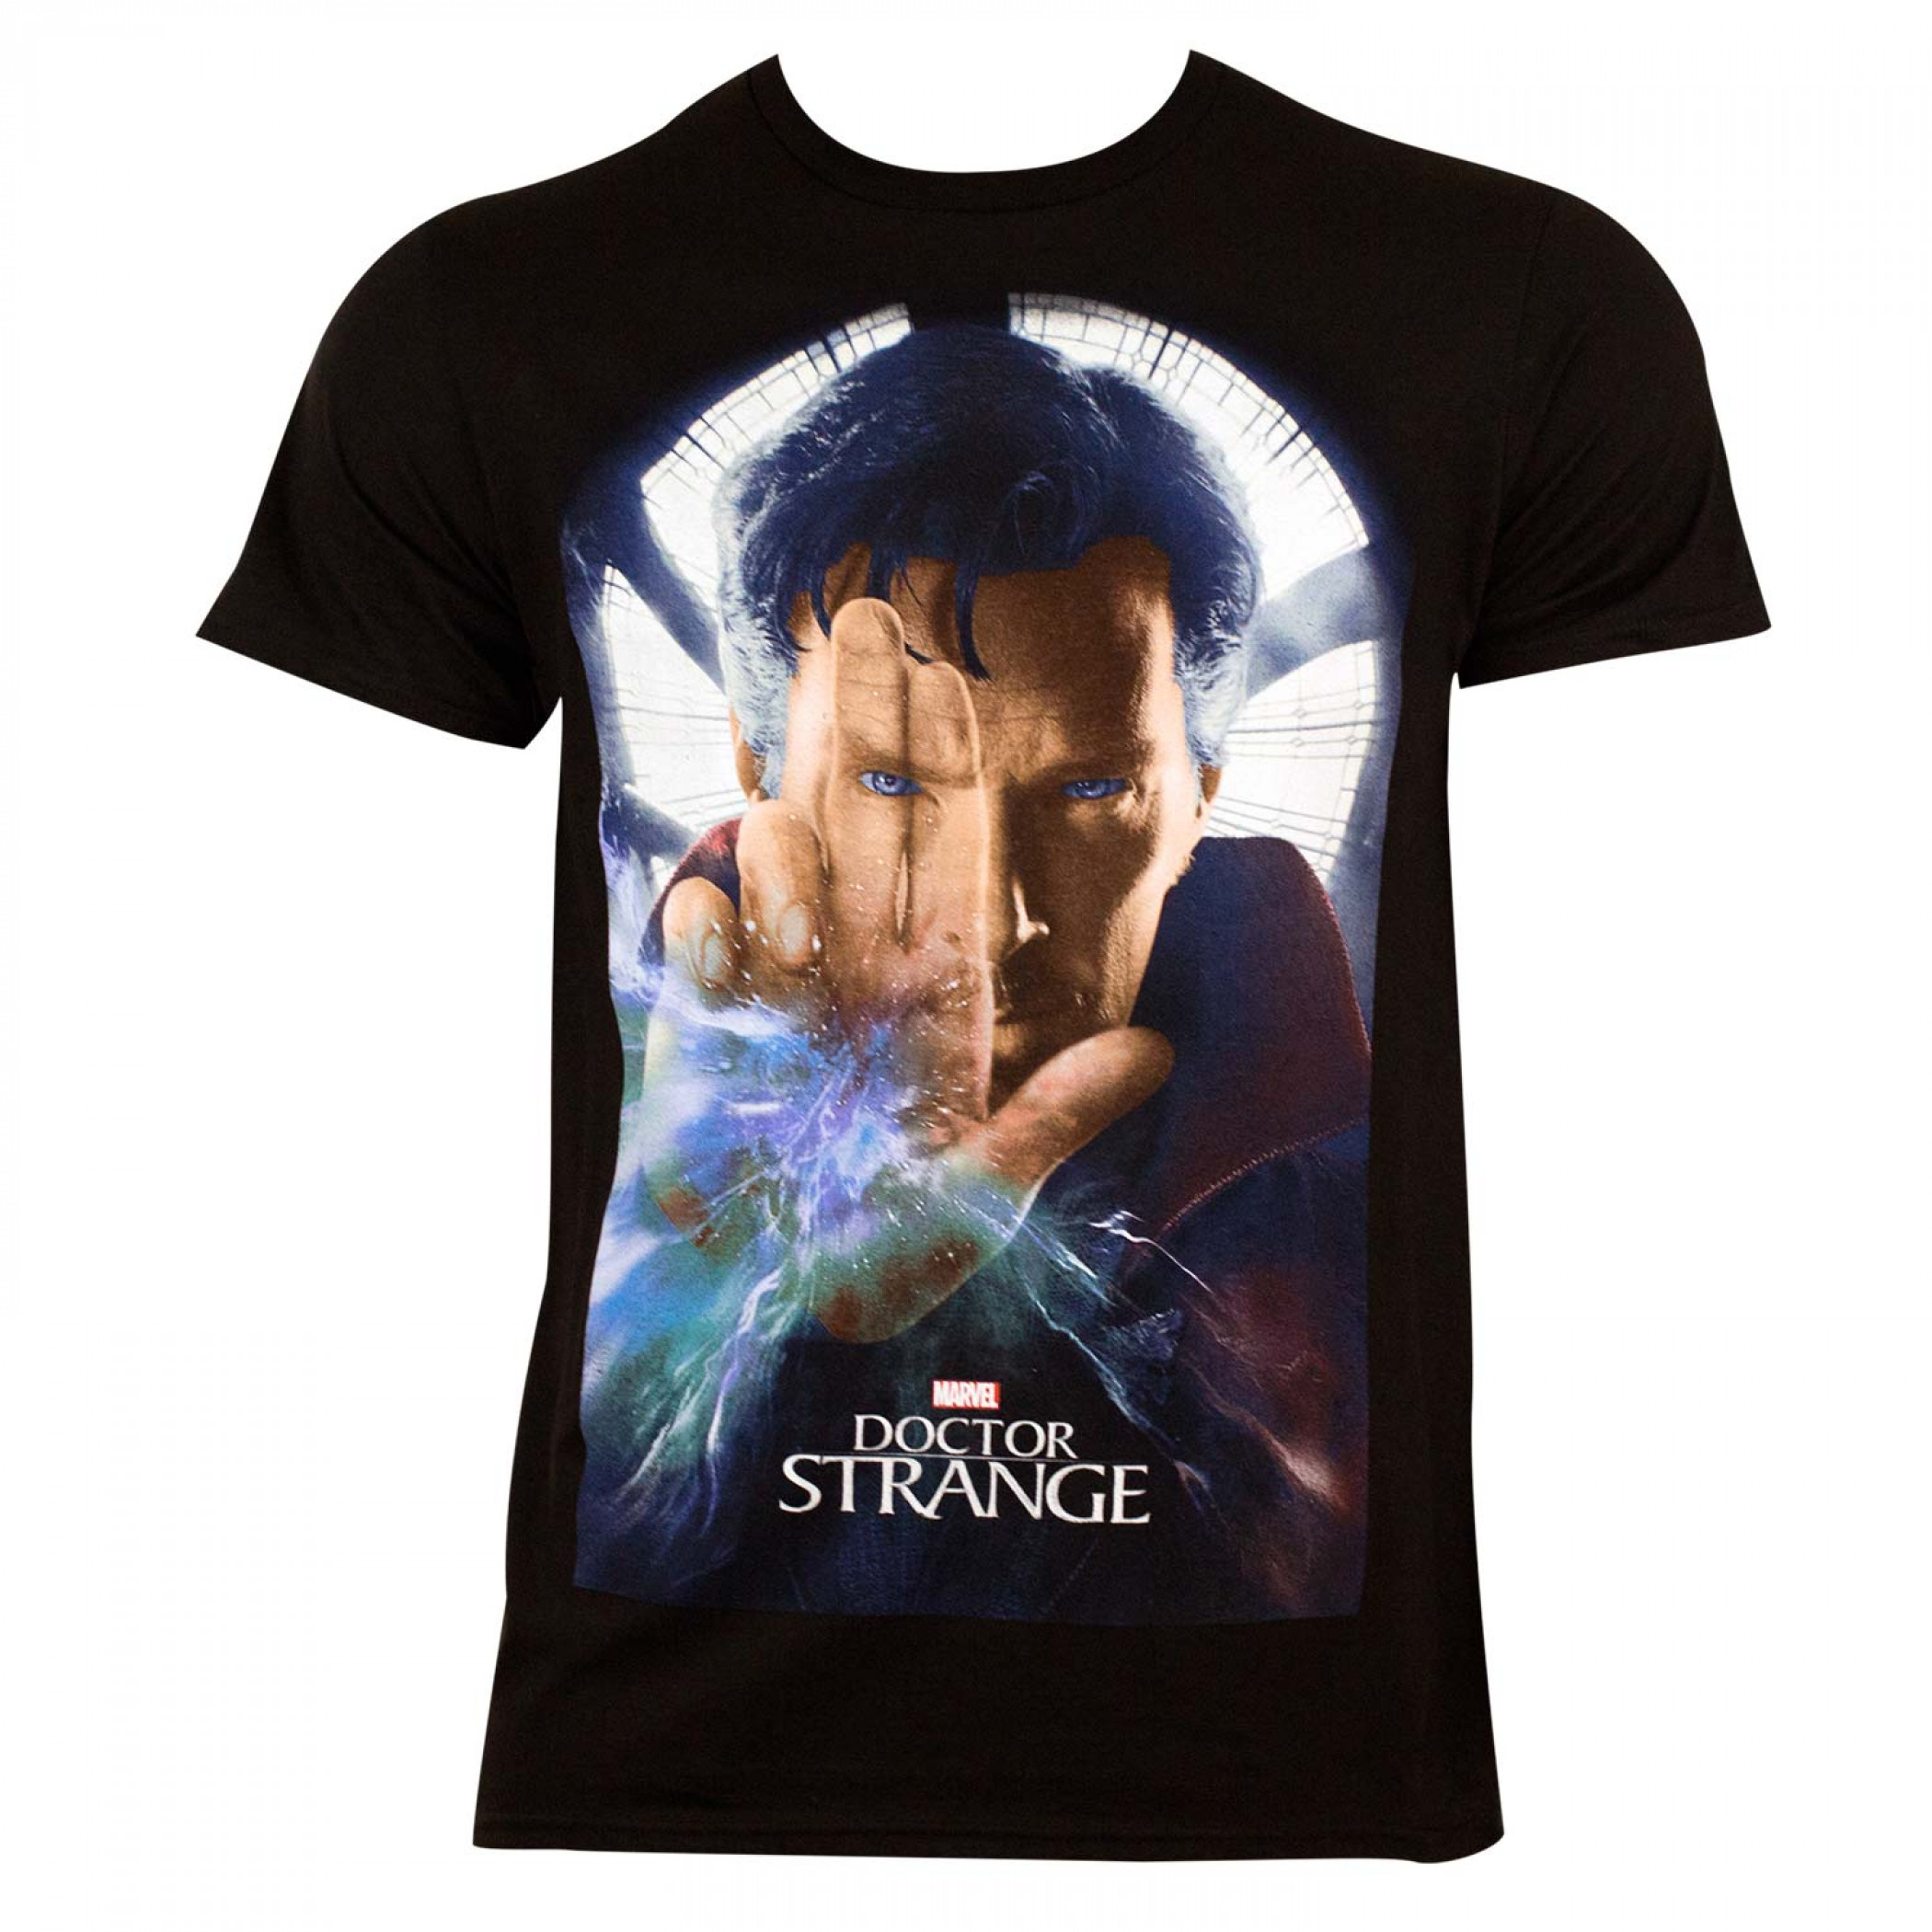 Dr. Strange Movie Poster Tee Shirt